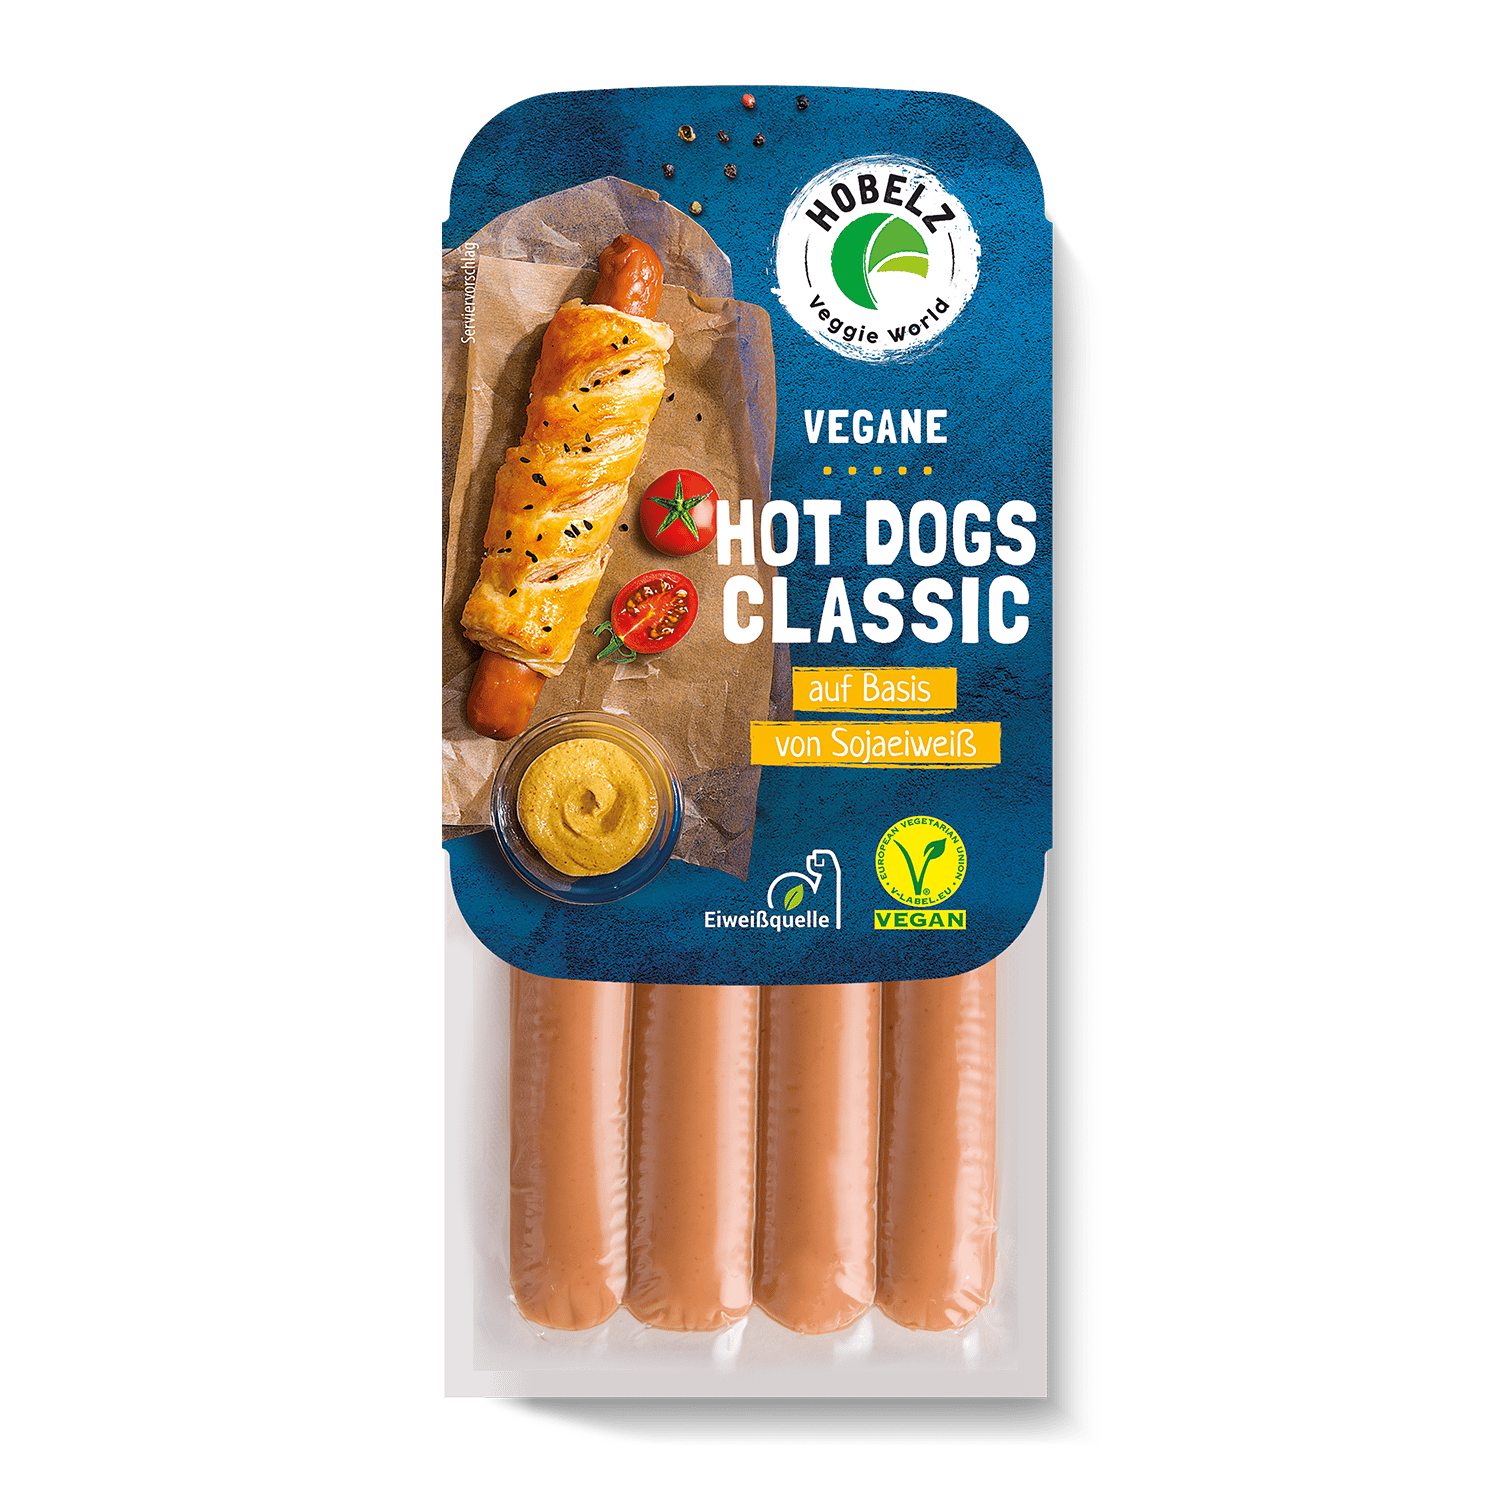 Vegane Hot Dogs Classic, 200g